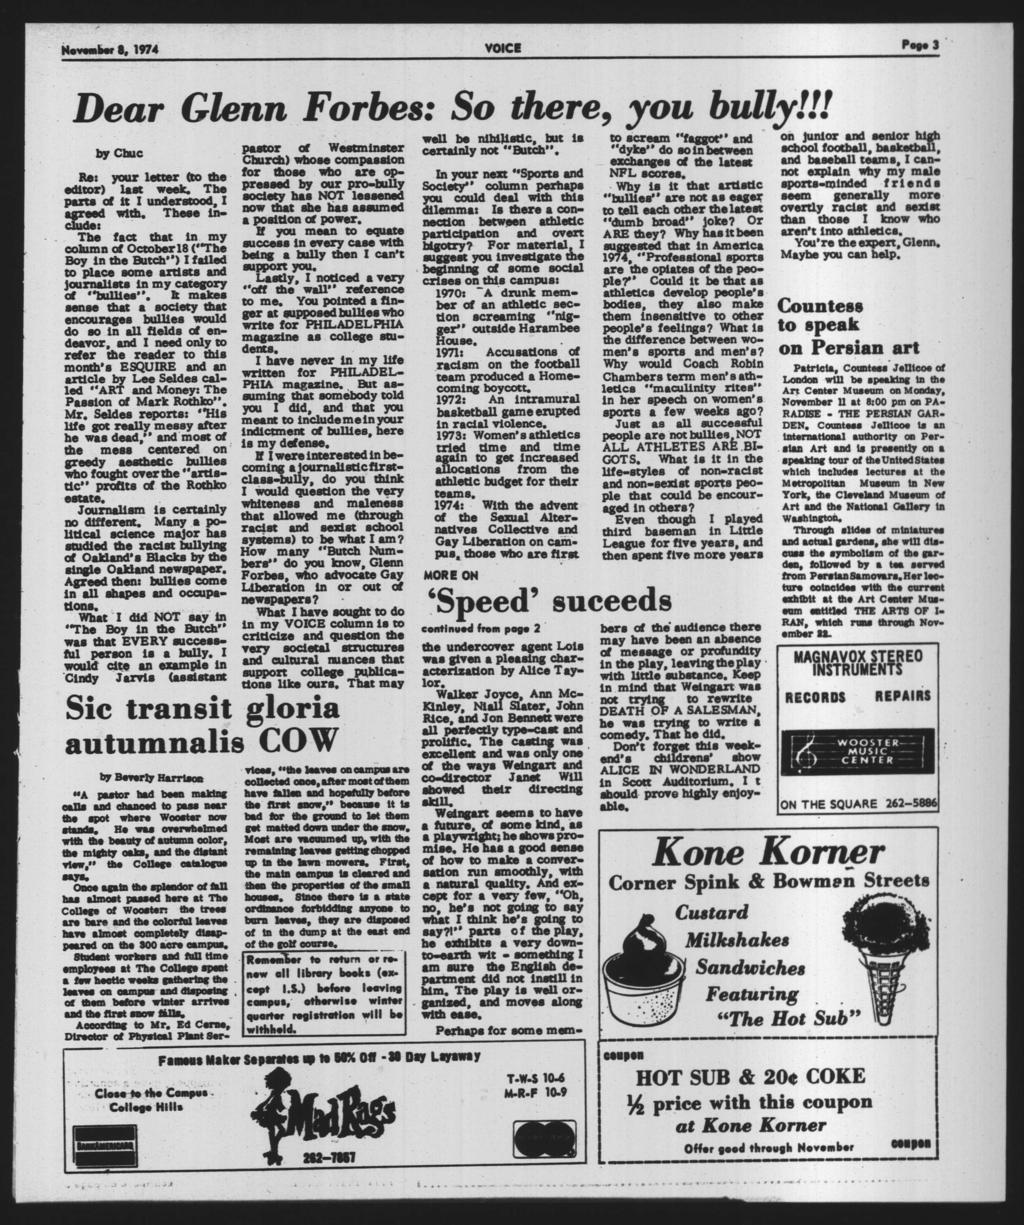 November 8, 1974 VOICE Peg 3 Ber Glenn Forbes: So there, you bully!